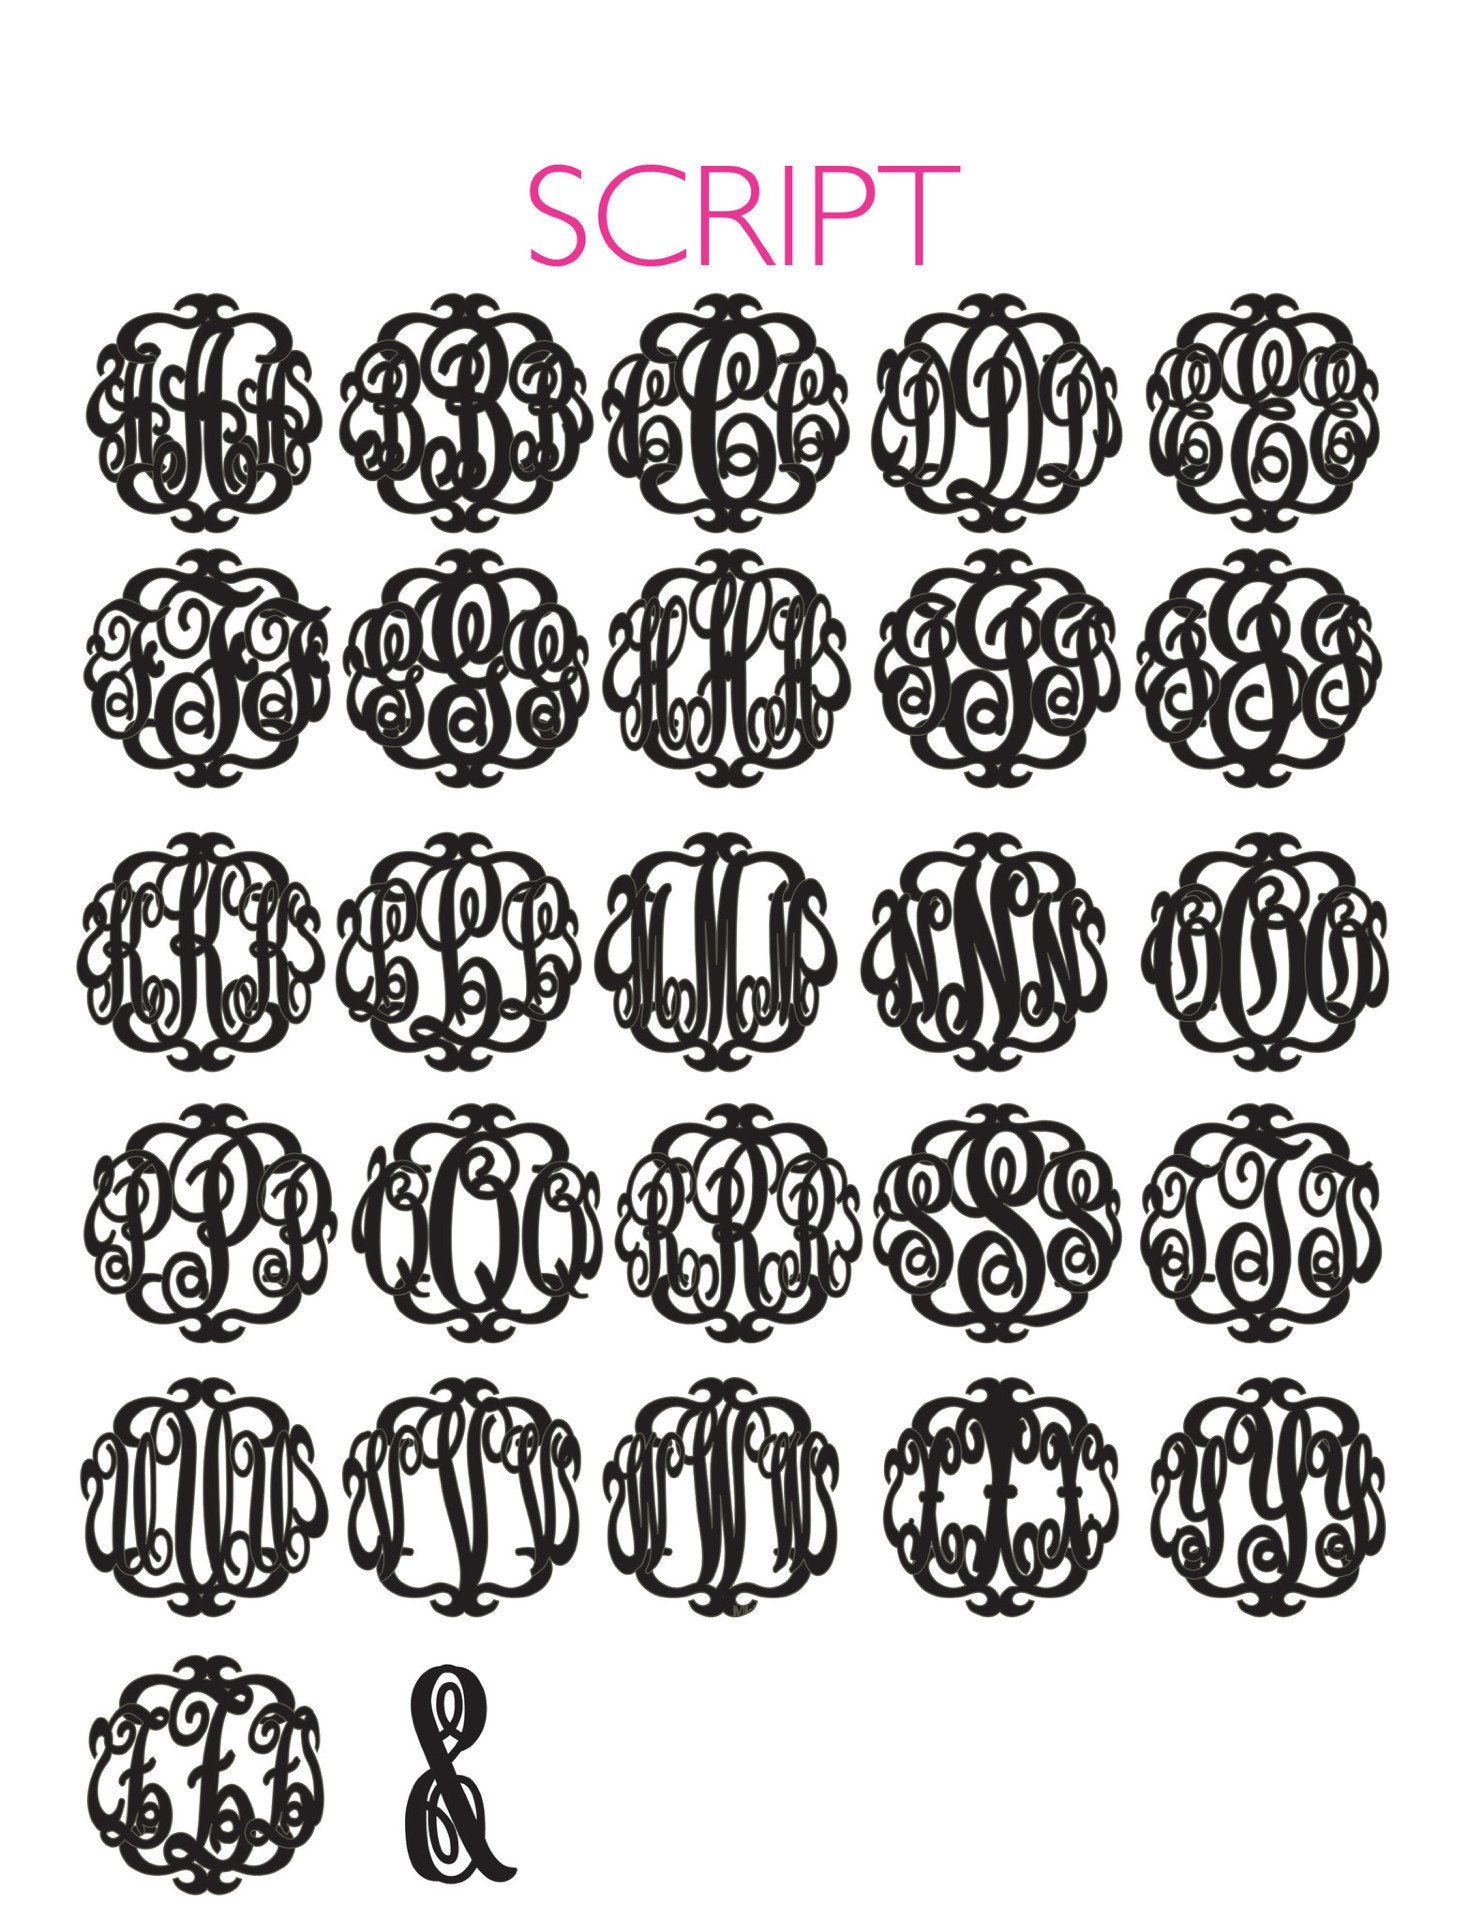 Sample "TAR" Paris Monogram Necklace